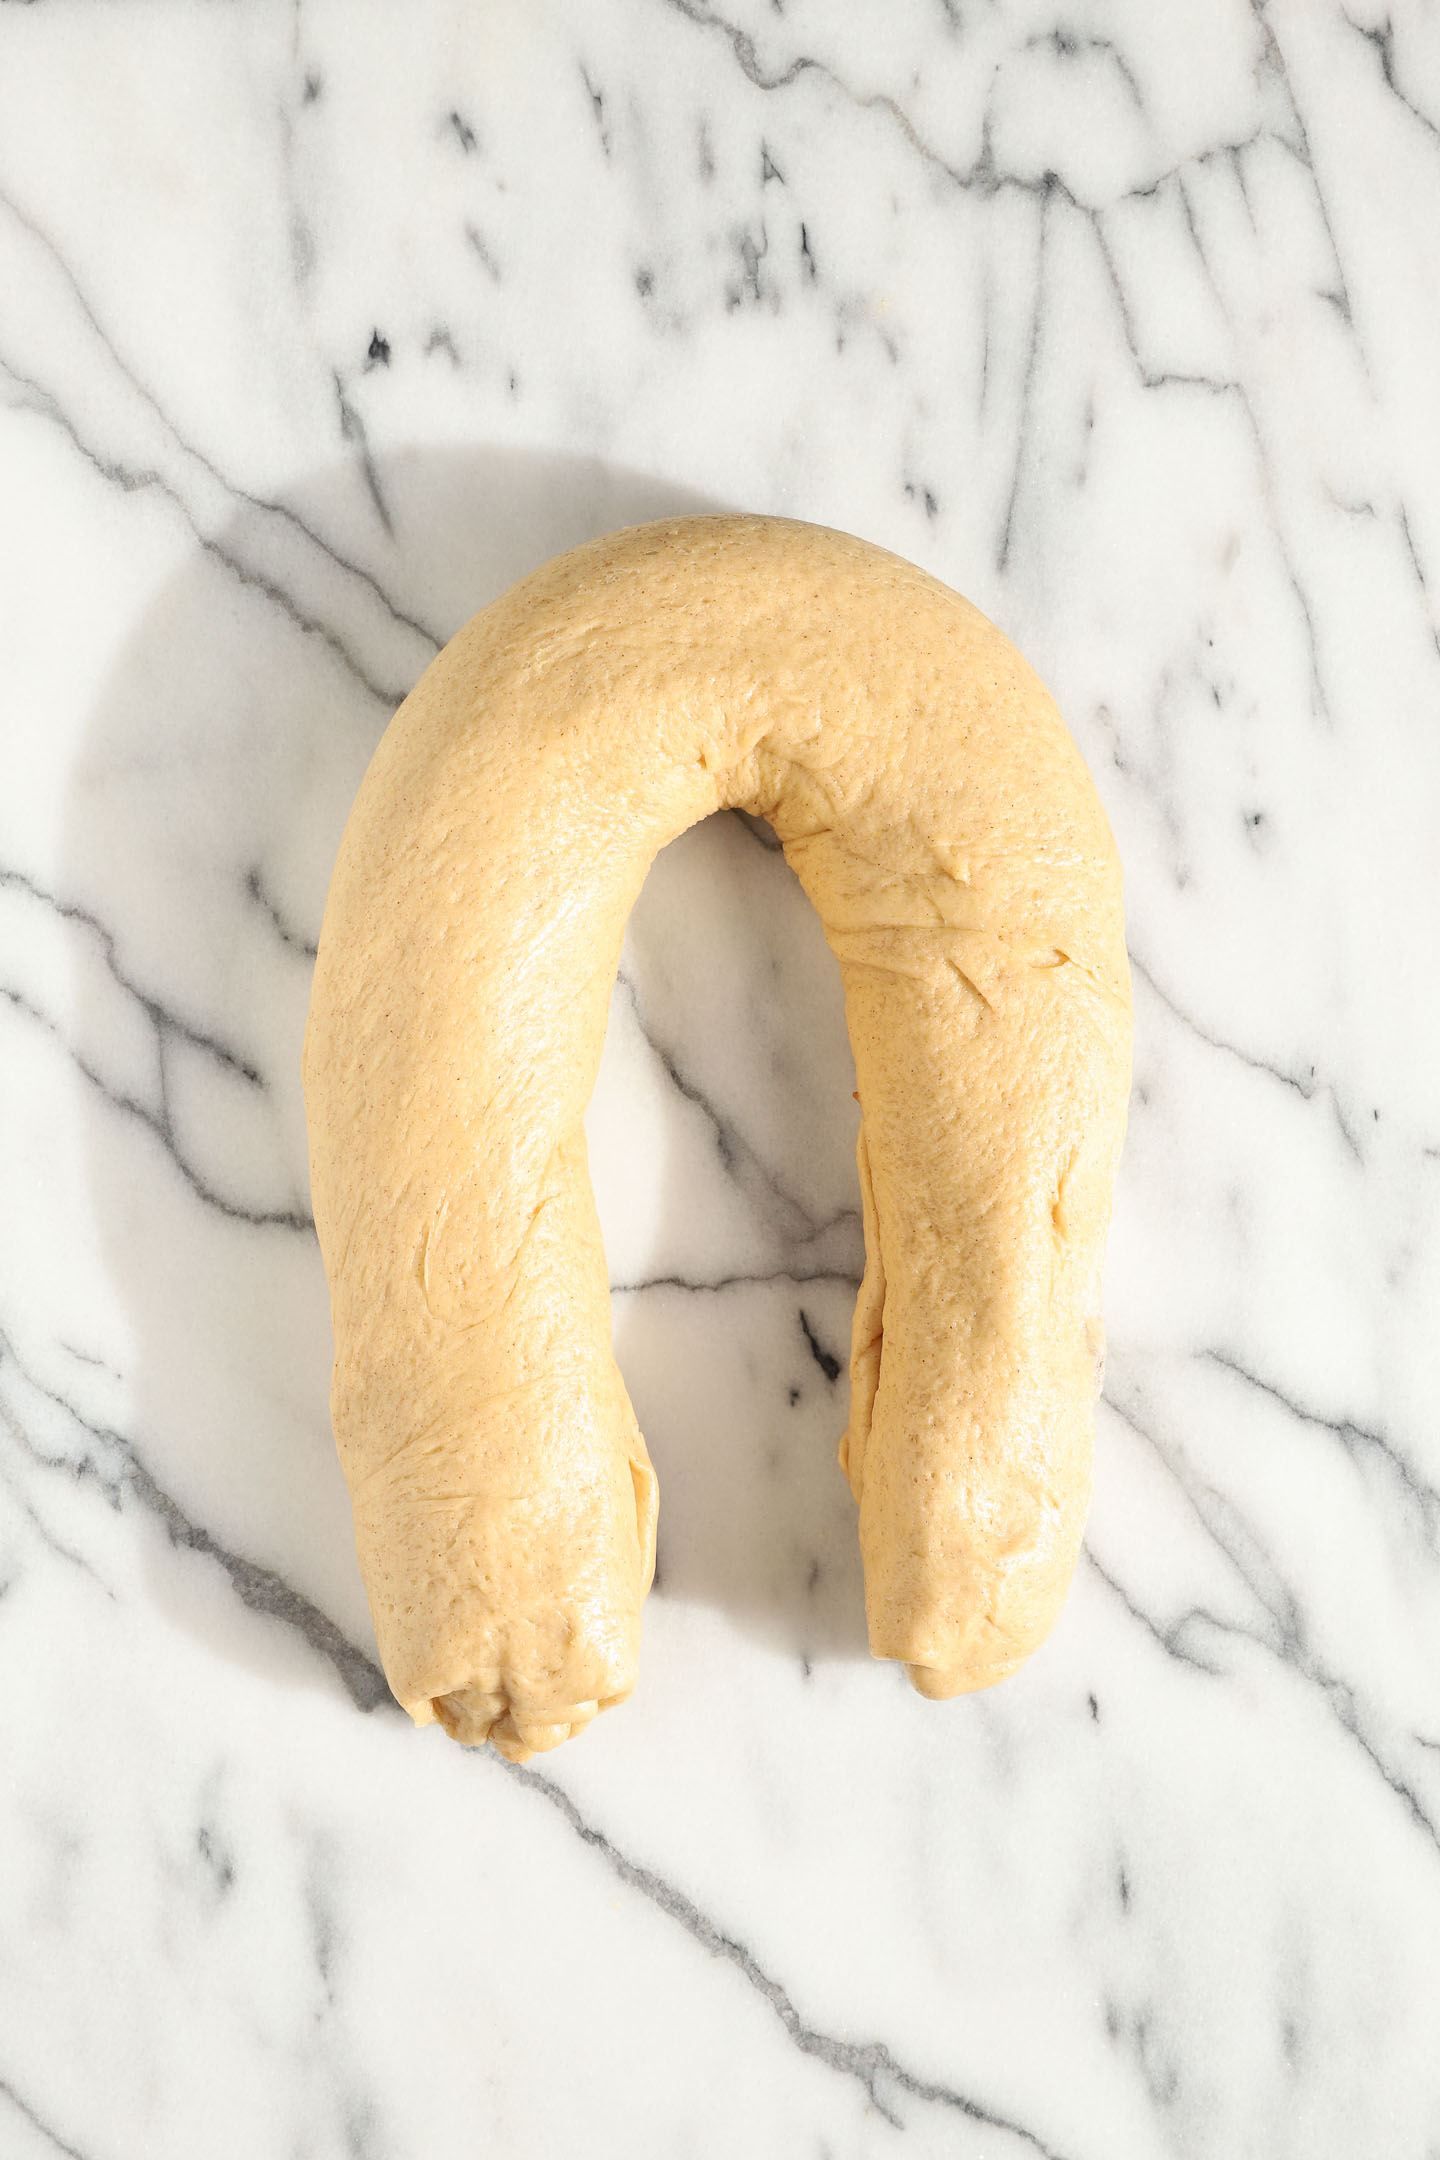 apple babka dough being shaped into a figure 8